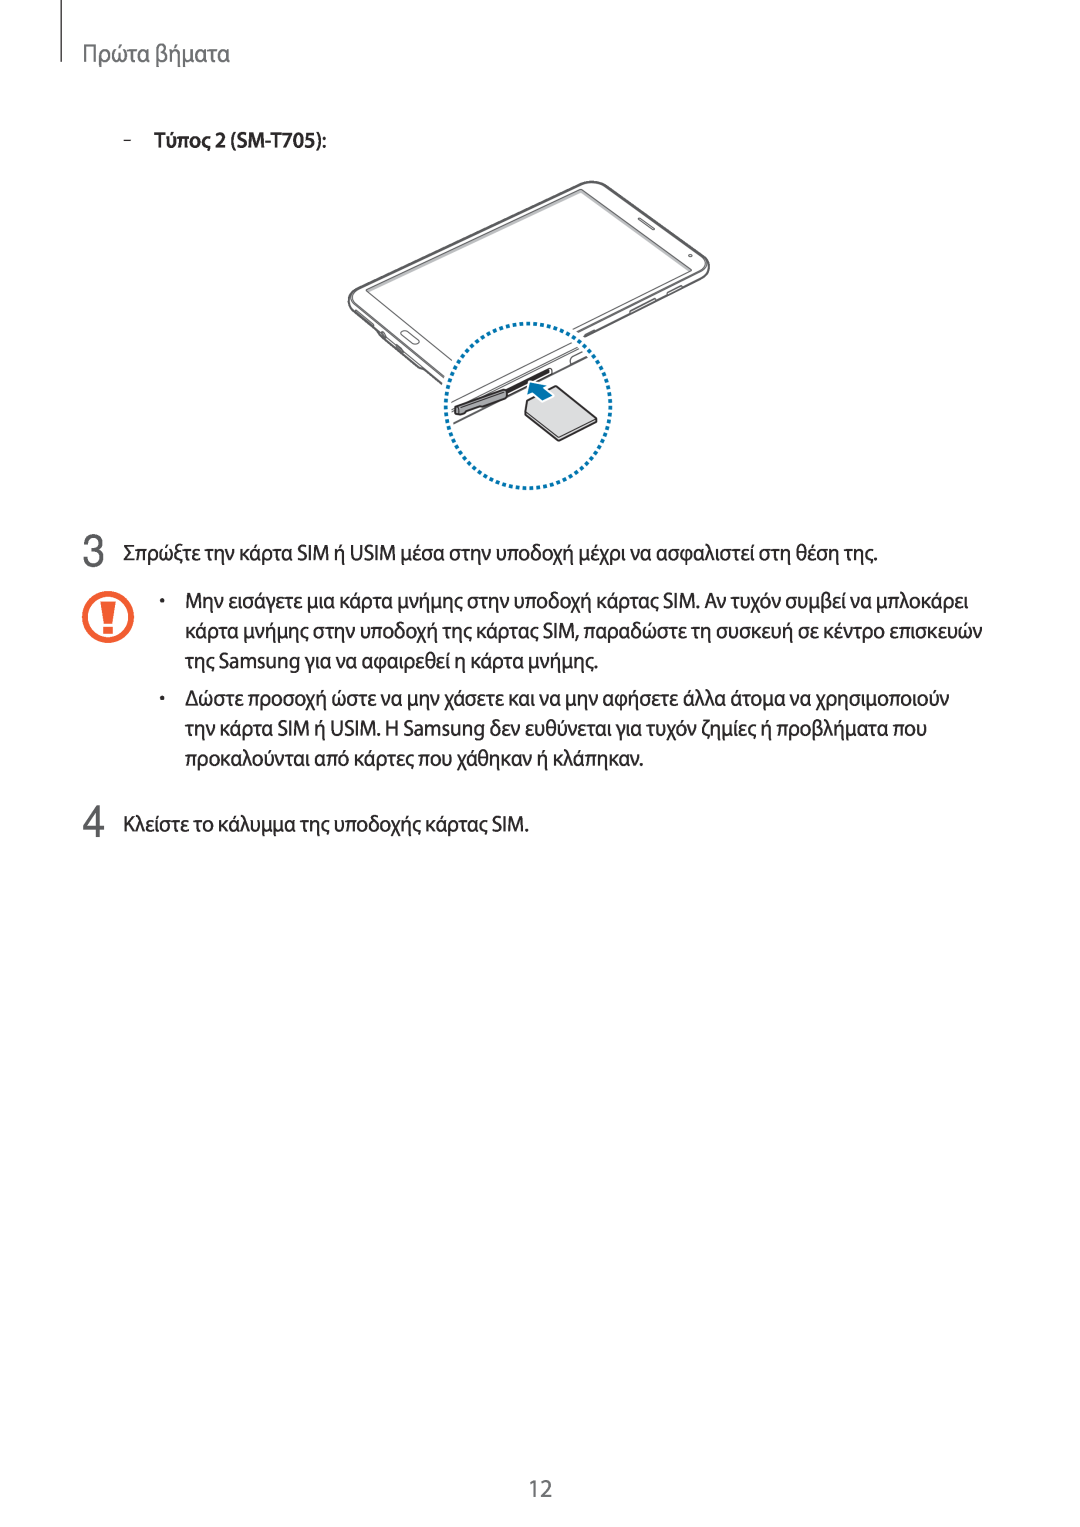 Samsung SM-T805NTSAEUR, SM-T705NZWAEUR manual Πρώτα βήματα, Τύπος 2 SM-T705, 4 Κλείστε το κάλυμμα της υποδοχής κάρτας SIM 